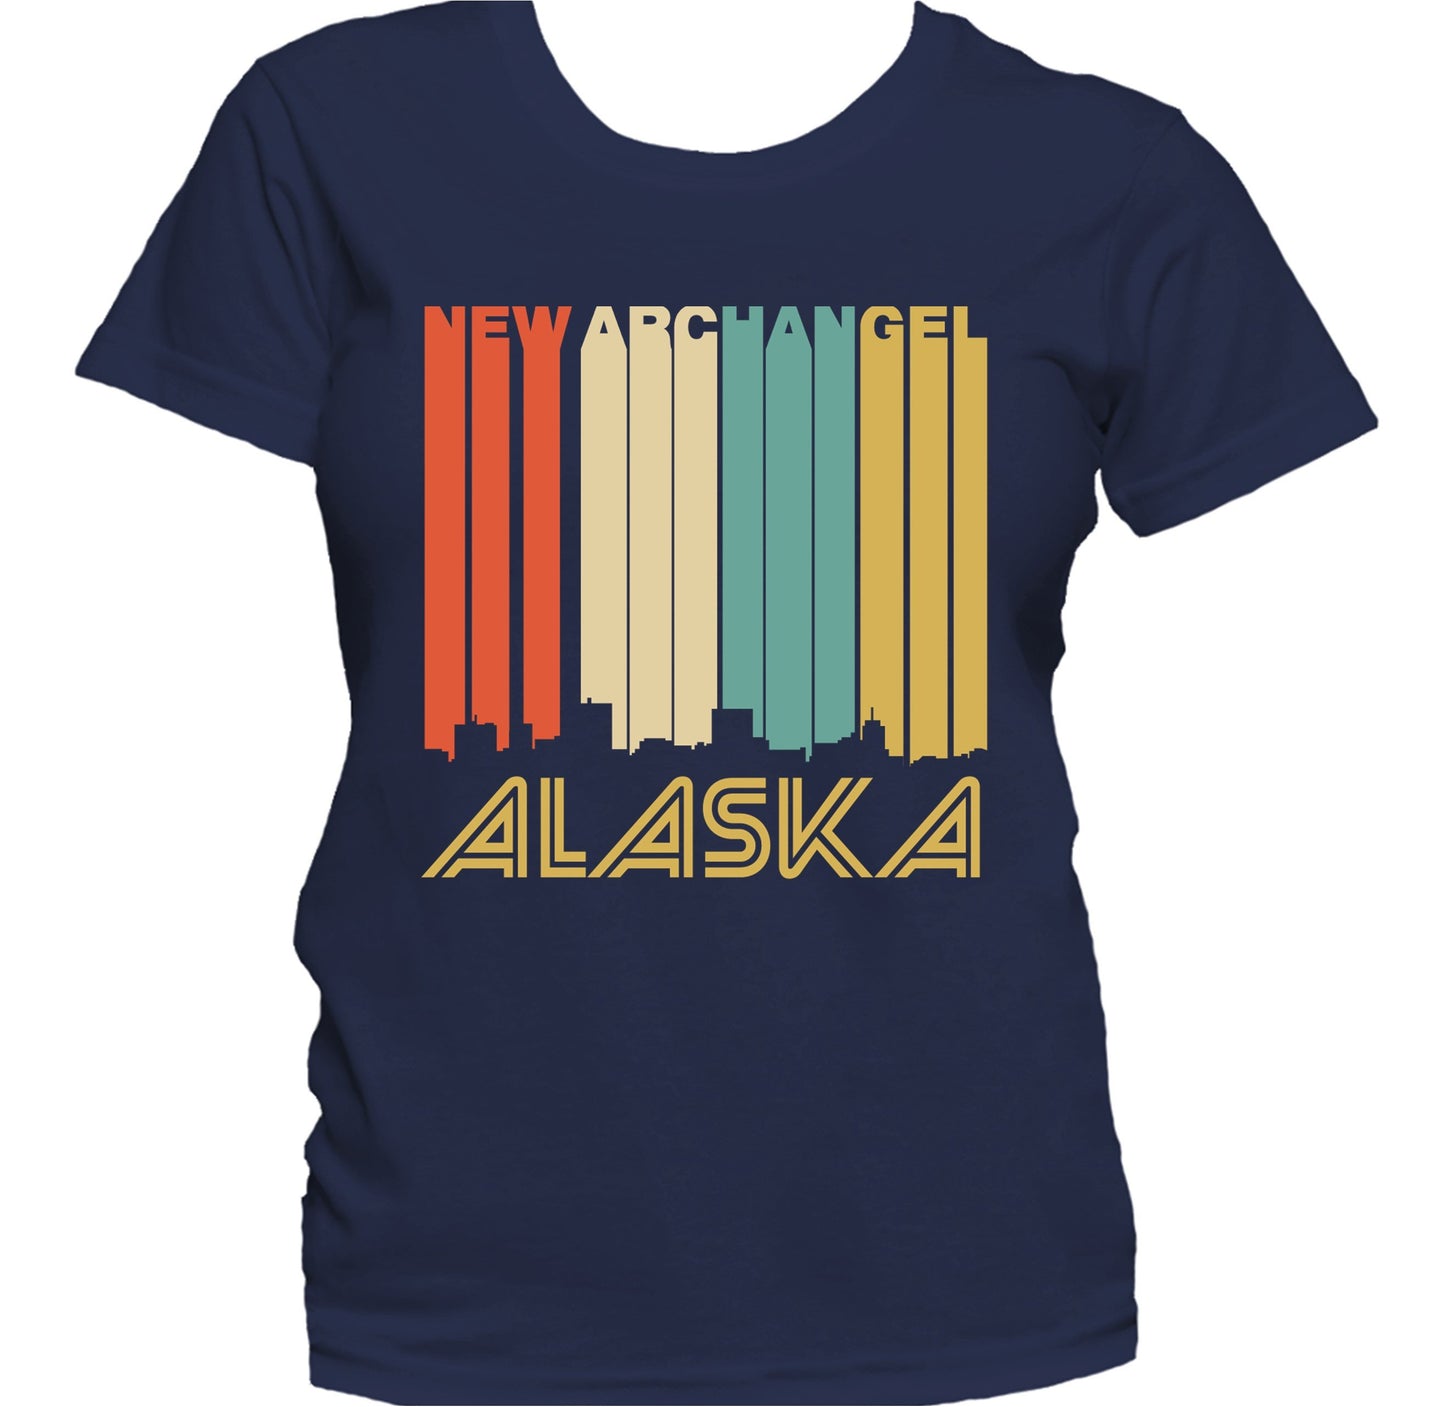 Retro 1970's Style New Archangel Alaska Skyline Women's T-Shirt